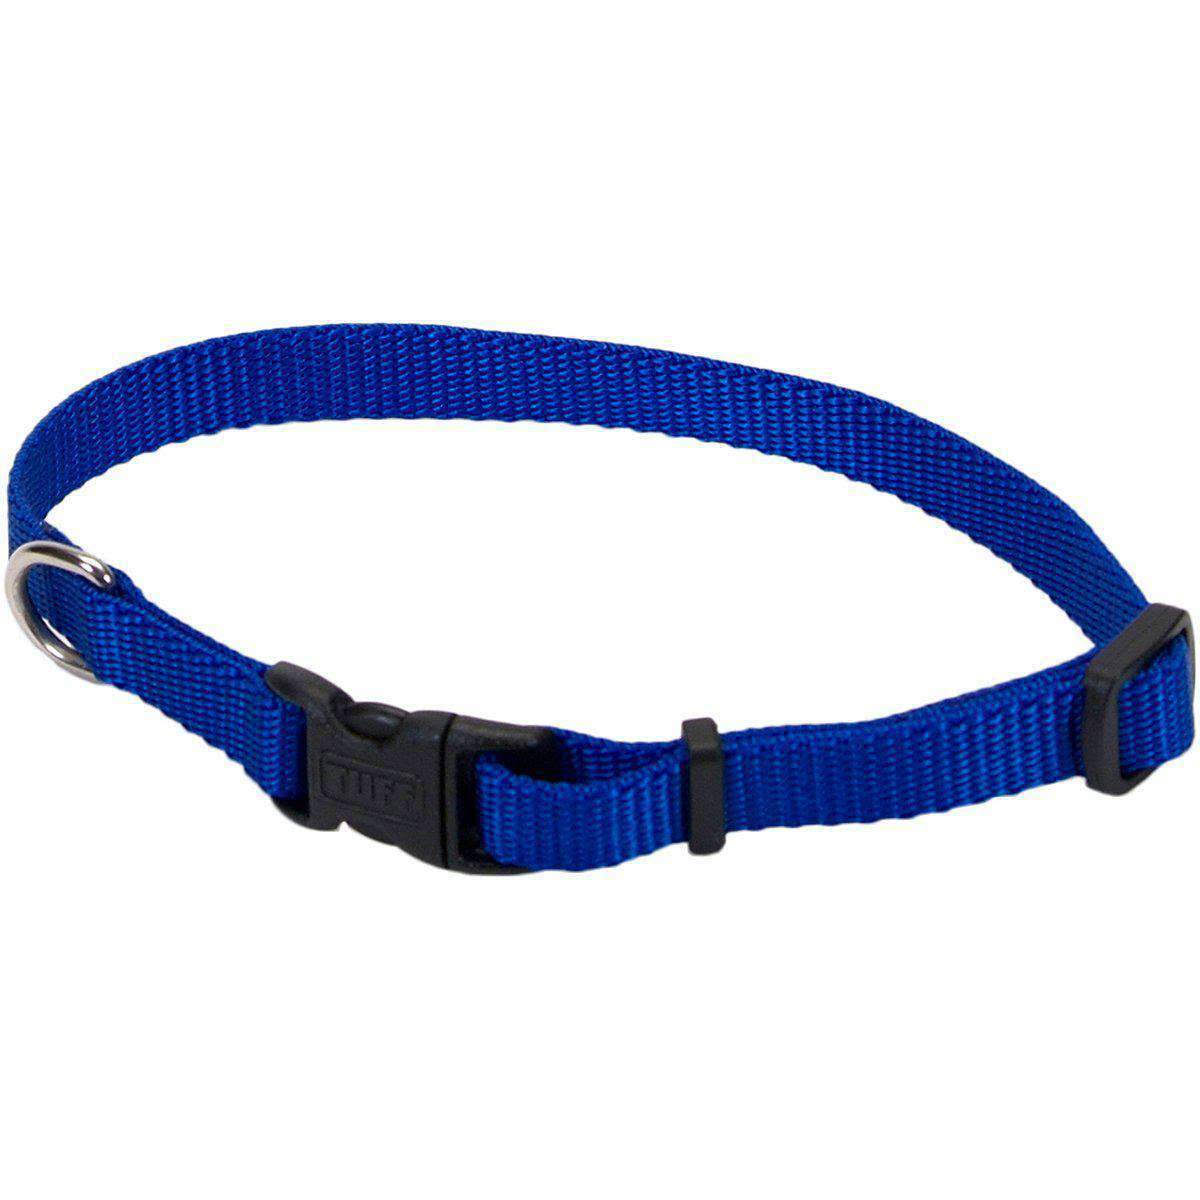 Coastal Tuff Nylon Adjustable Dog Collar - X-Small, Blue, 3/8" x 8" to 12"